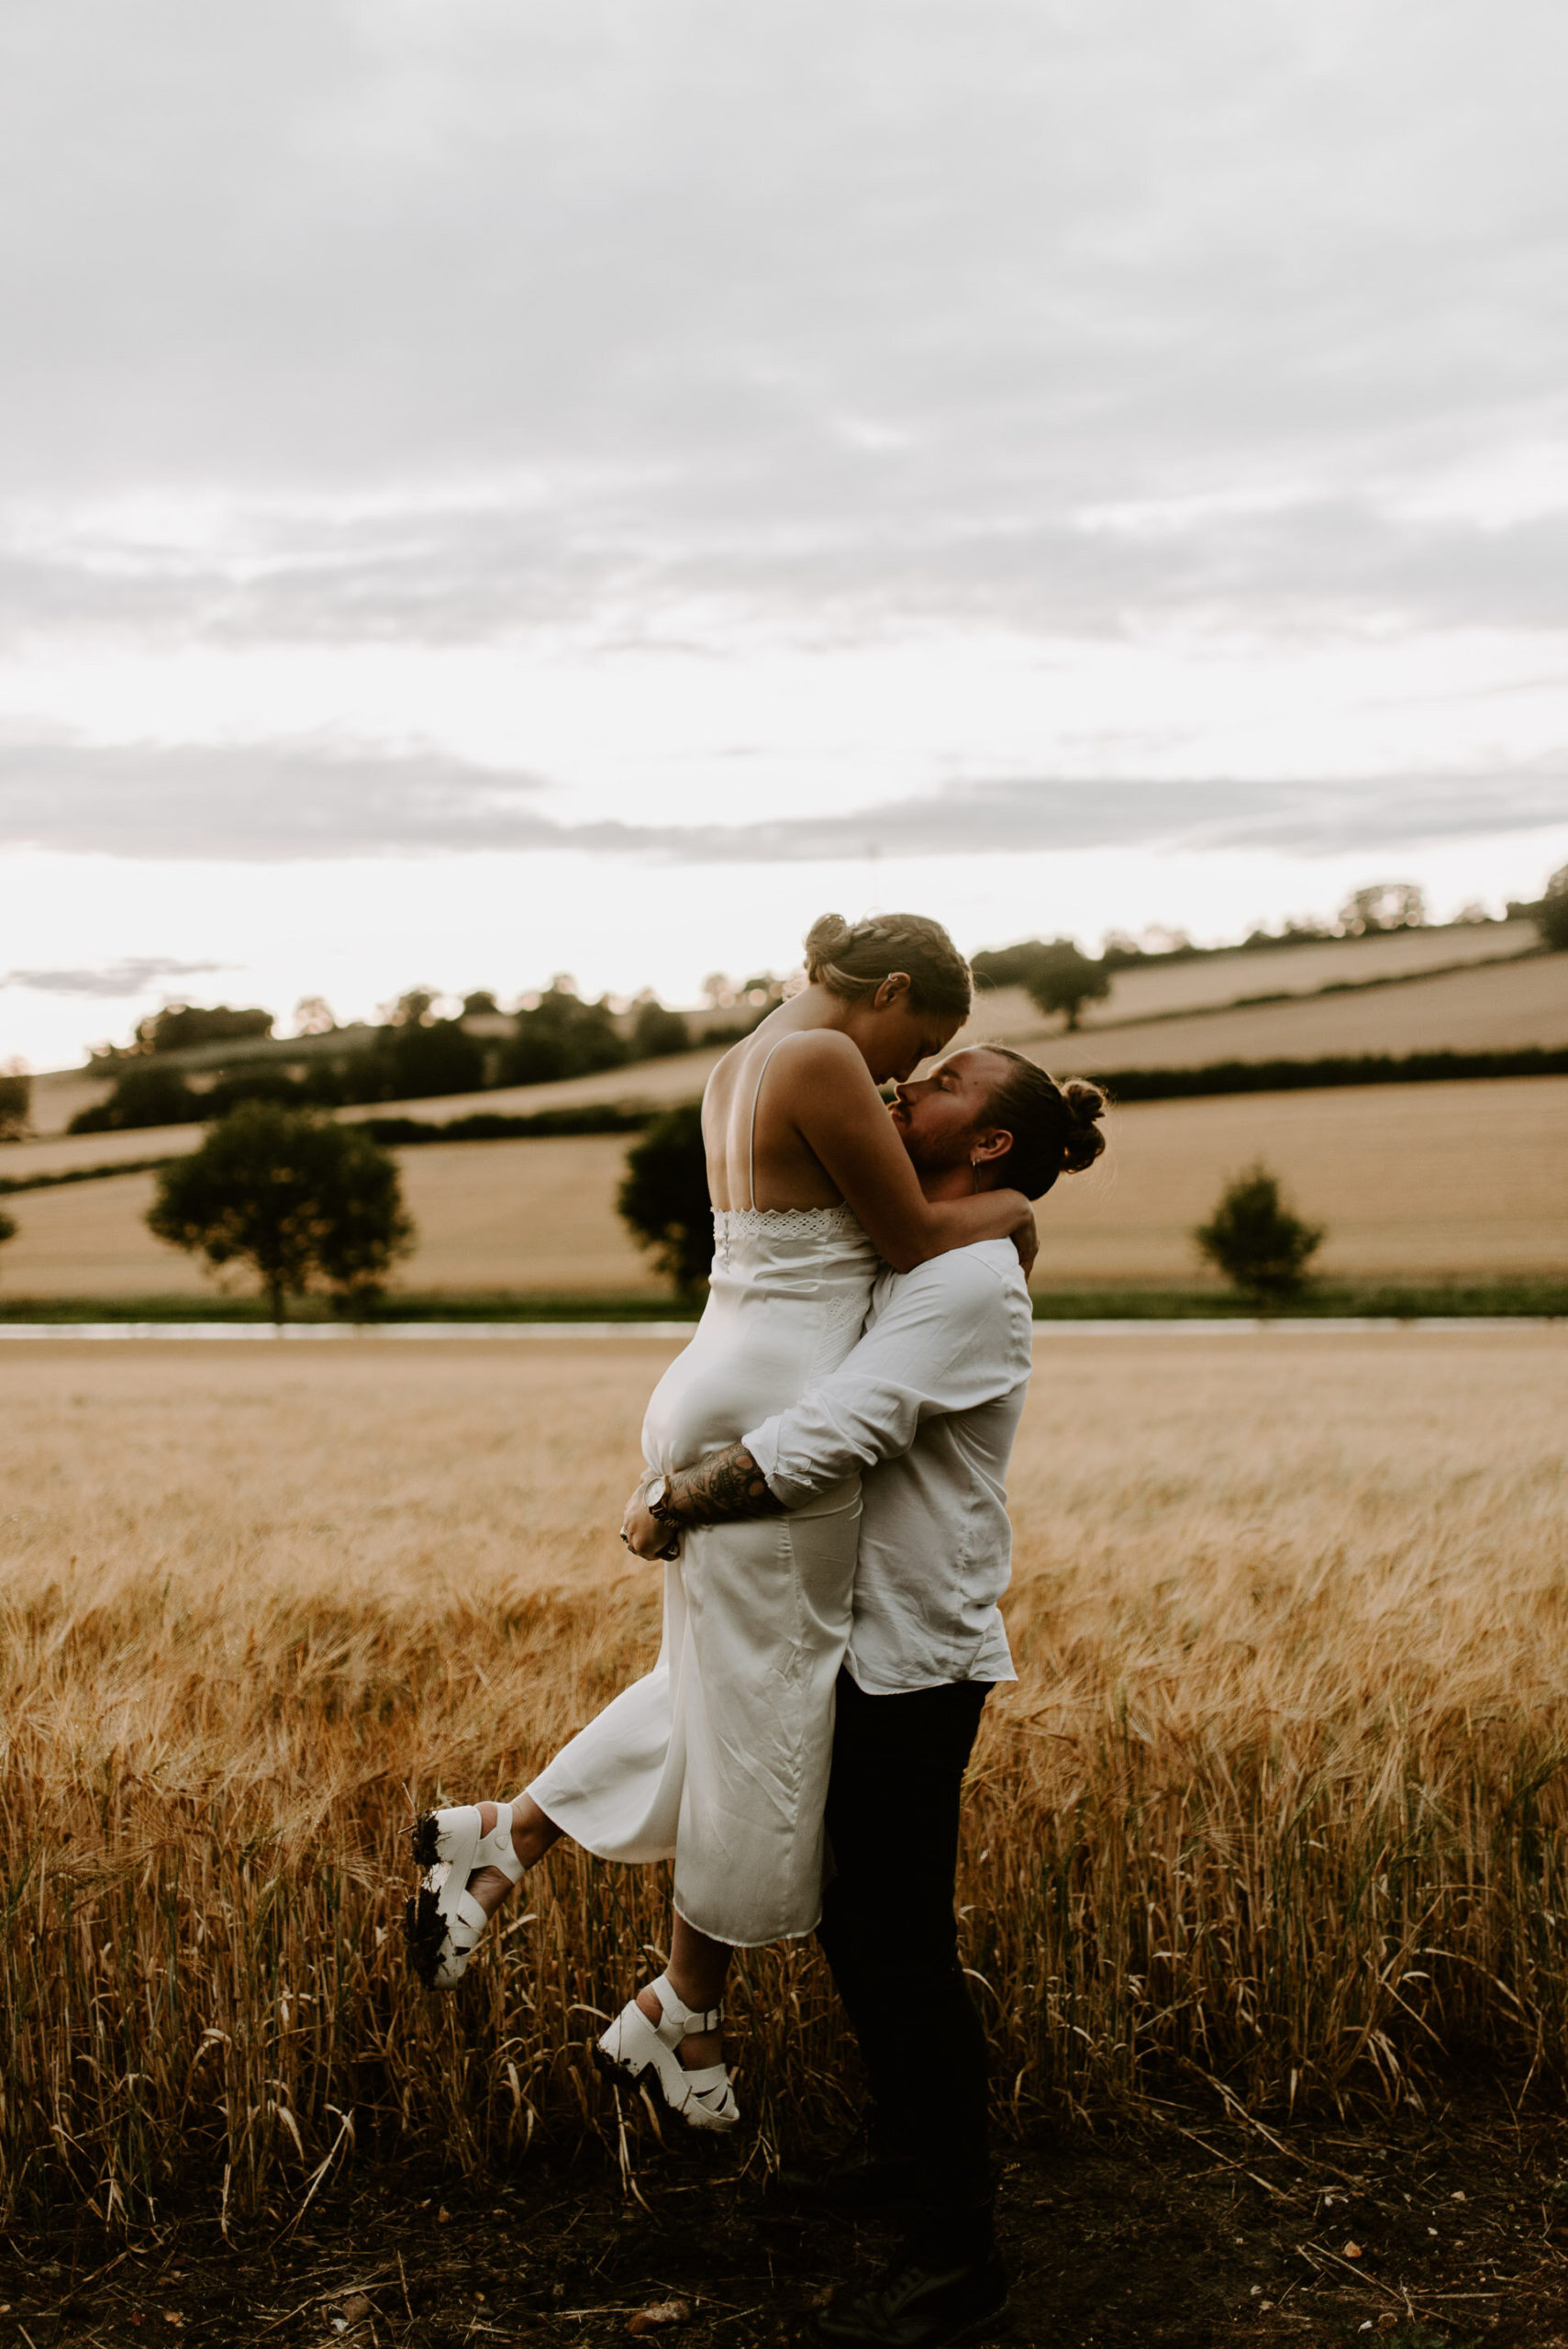 Romantic Boho Wedding Shoot - 25 July - Laura Williams Photography - LR-143 - Bury Court Barn.jpg